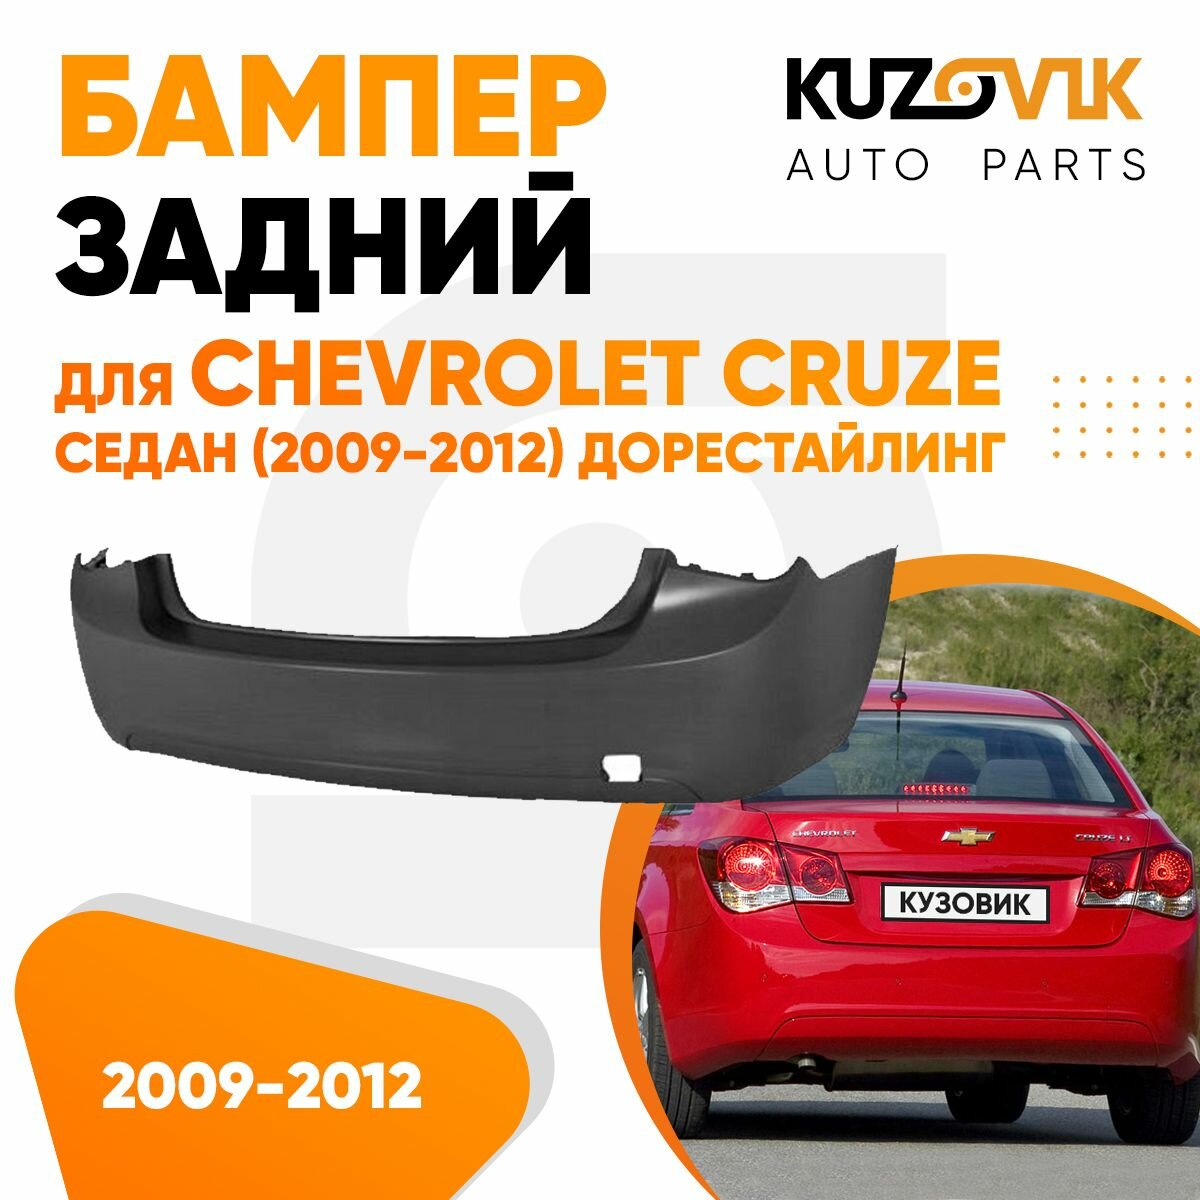 Бампер задний Chevrolet Cruze (2009-2012) седан дорестайлинг